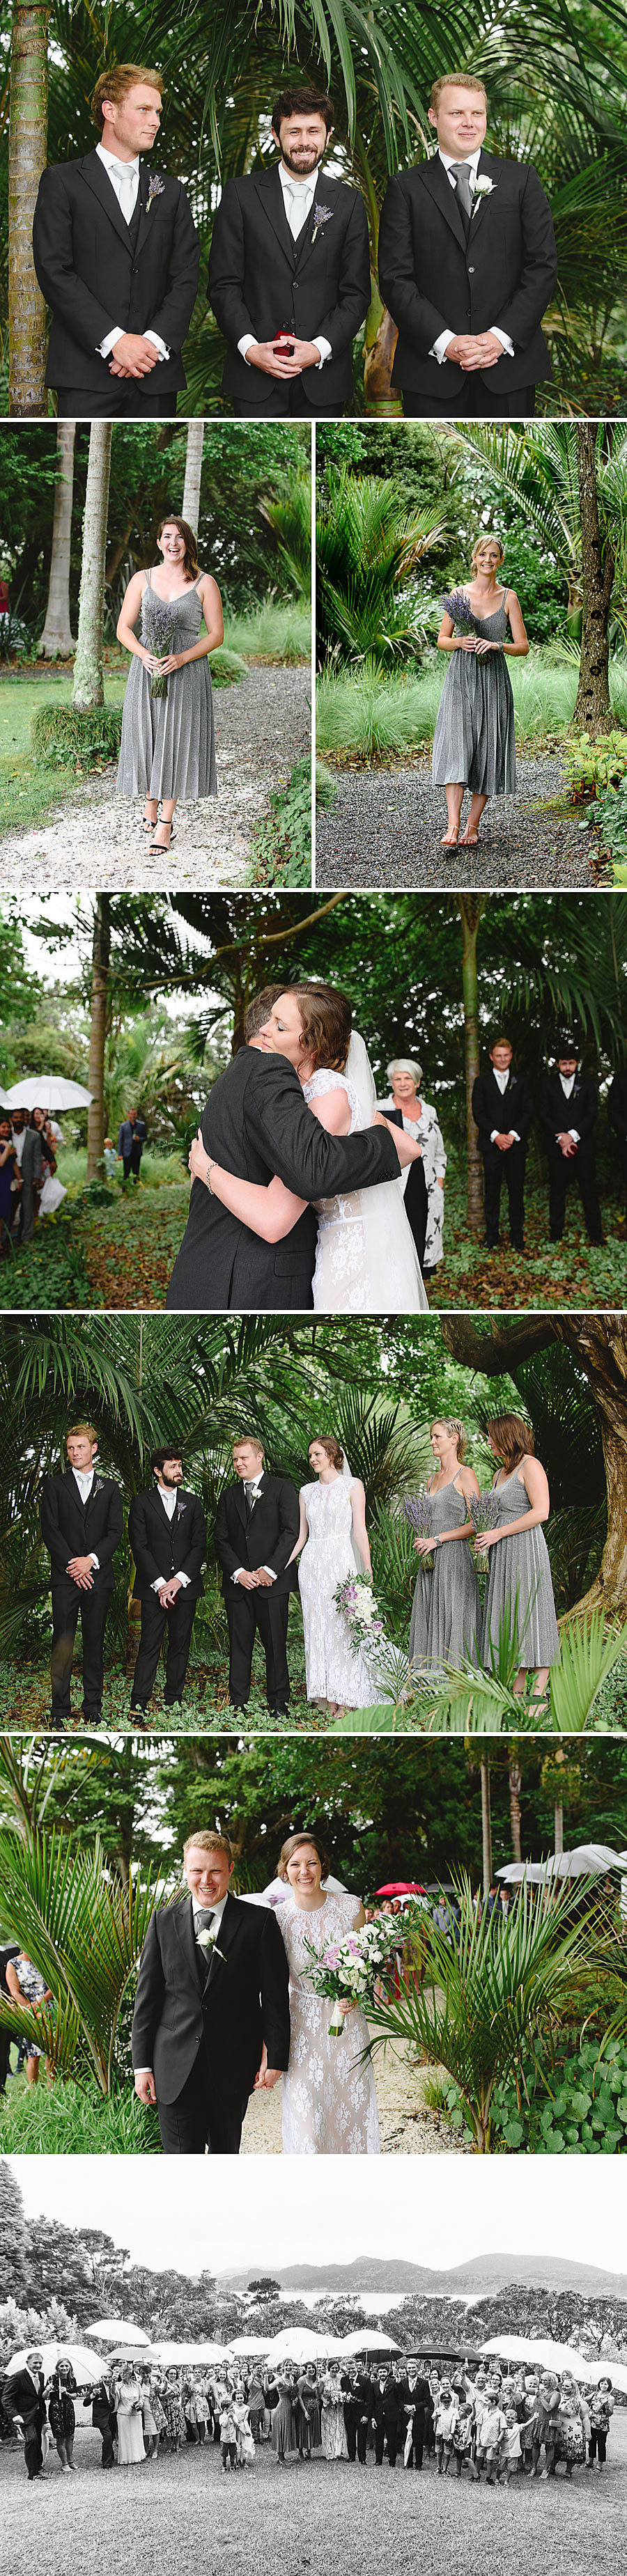 Ruth and Guys Wedding Photo with Photographer Jess Burges. New Zealand Photographer